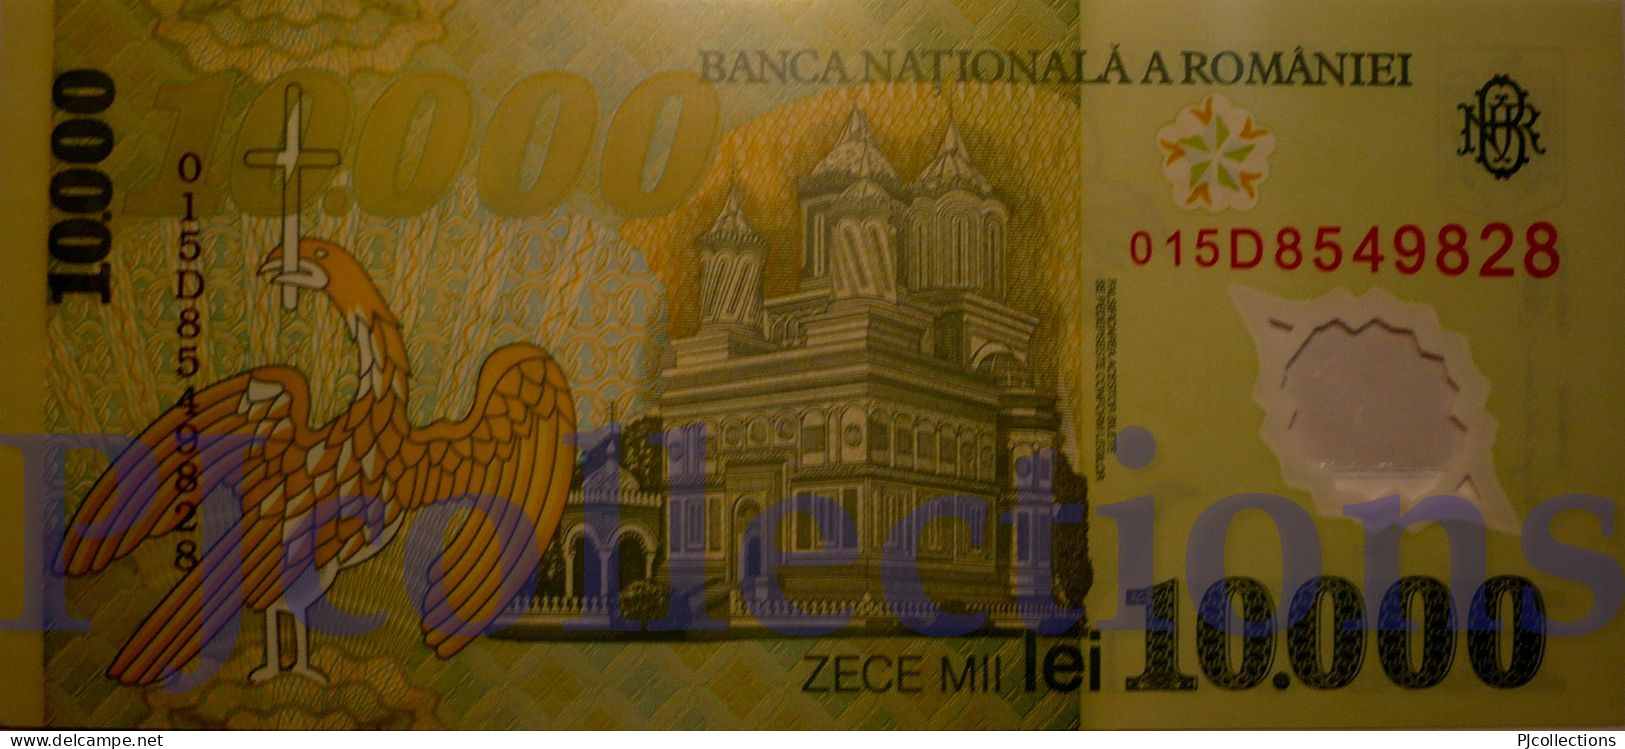 ROMANIA 10000 LEI 2000 PICK 112b POLYMER UNC - Rumänien